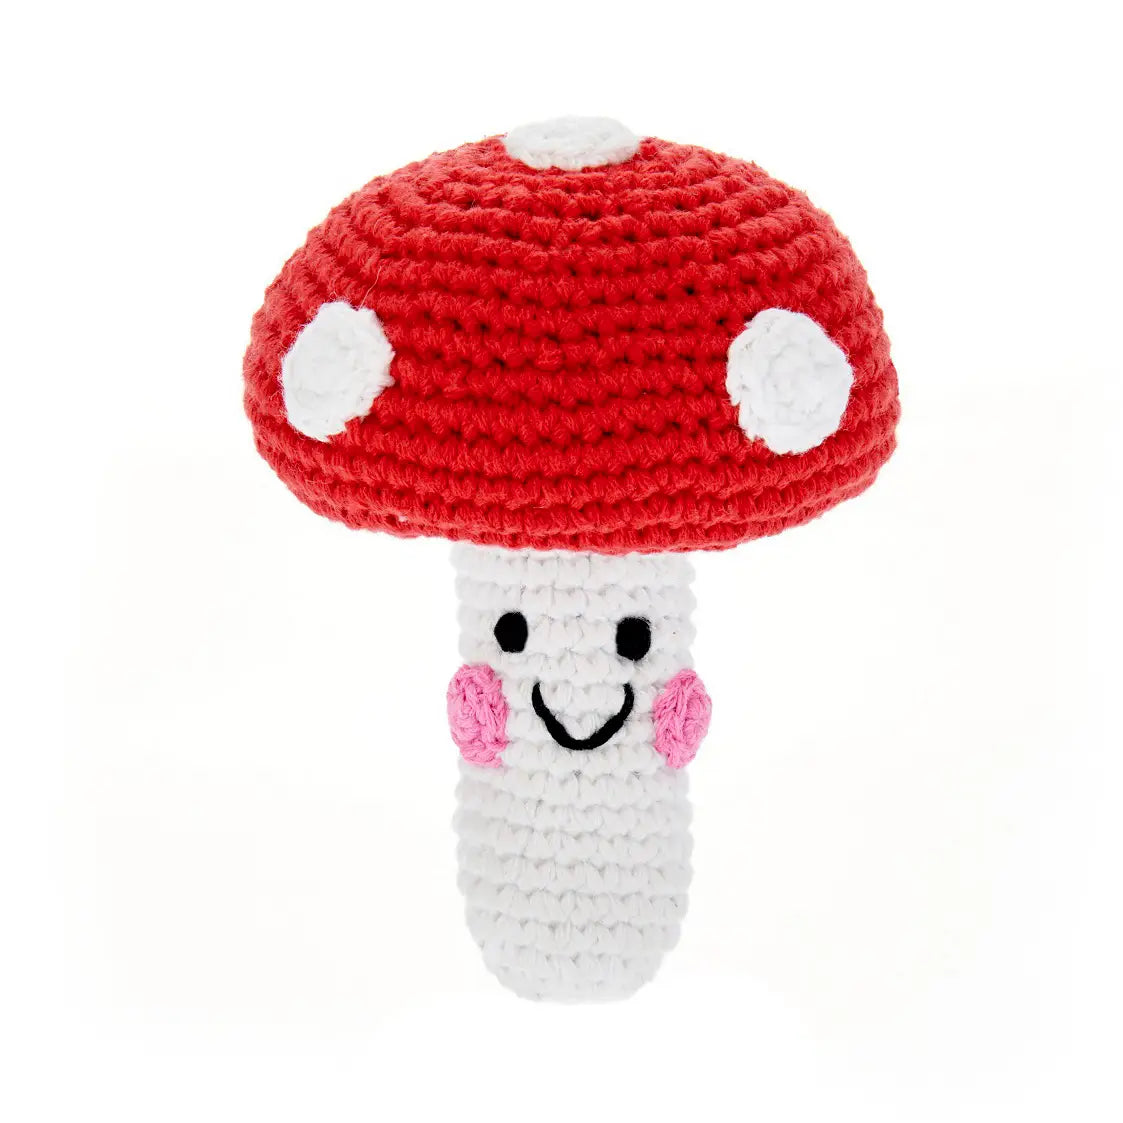 Organic Crocheted Veggie Rattle | Friendly Red Mushroom